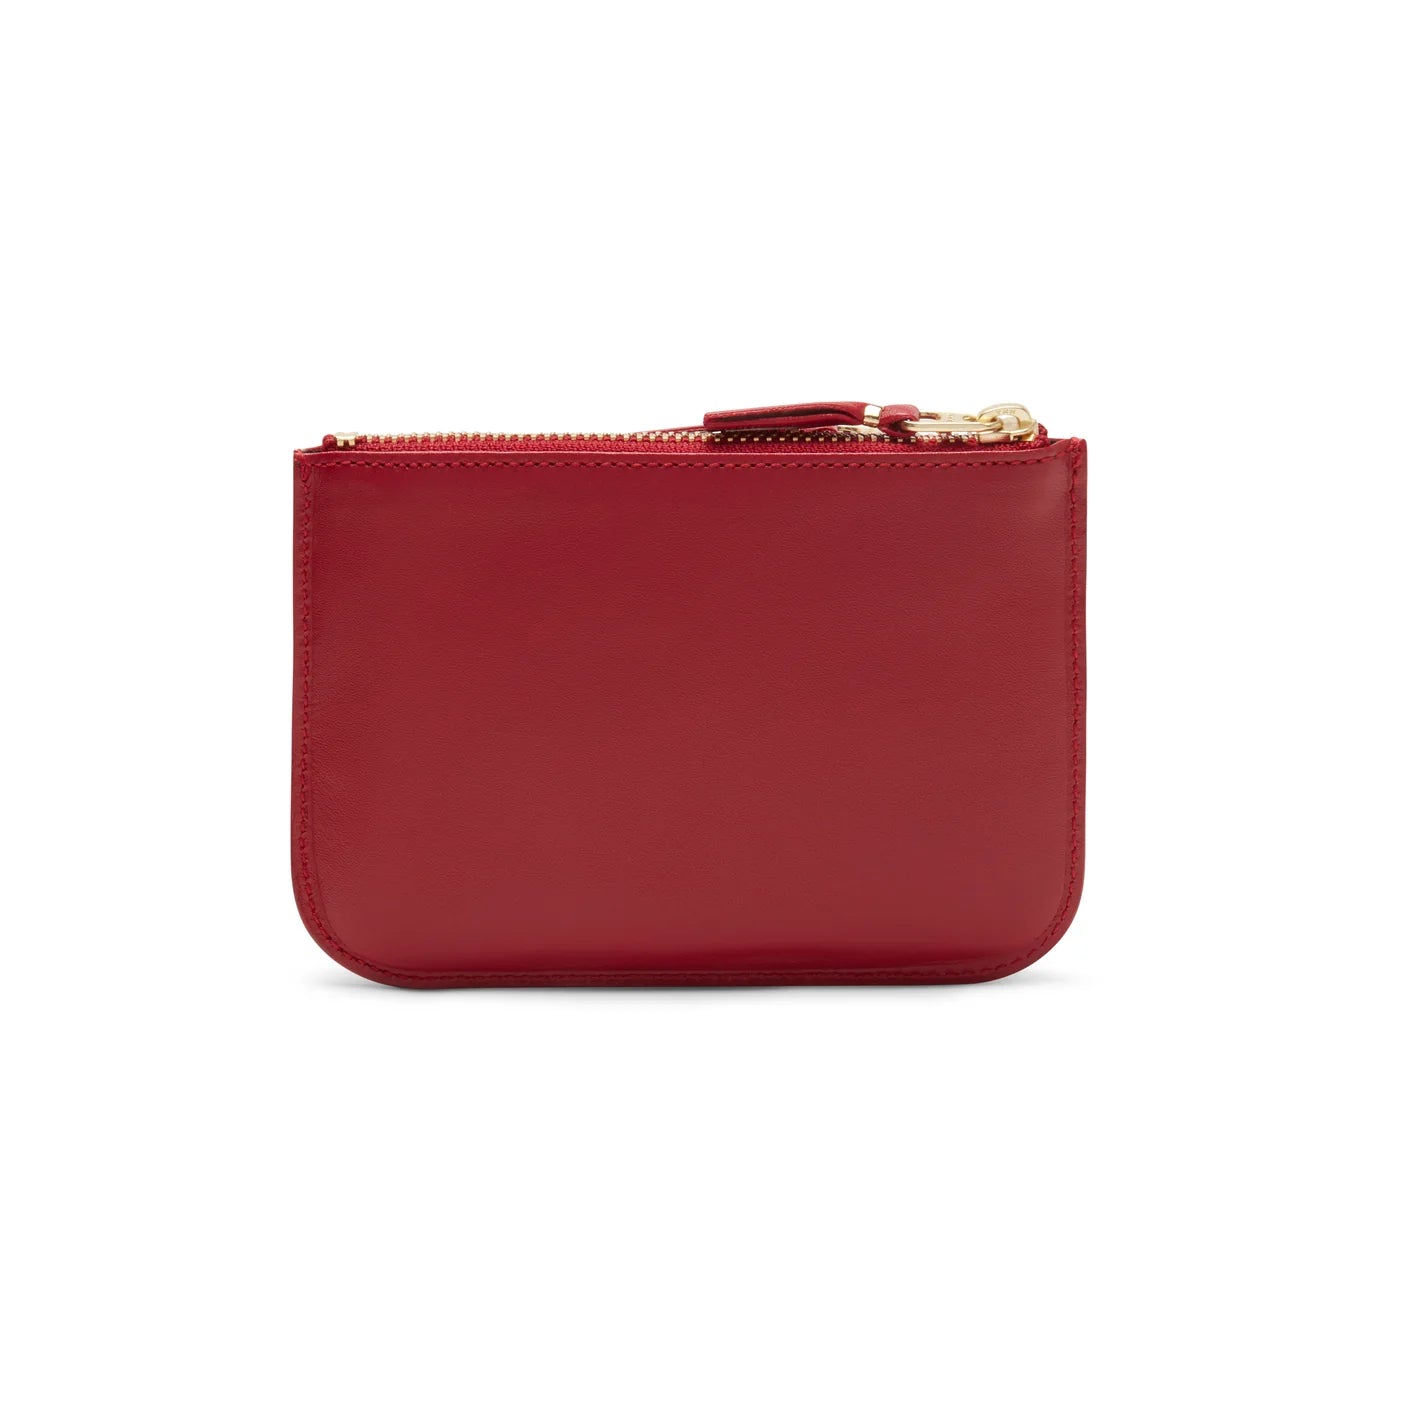 Outside Pocket Red Wallet (8100OPR)